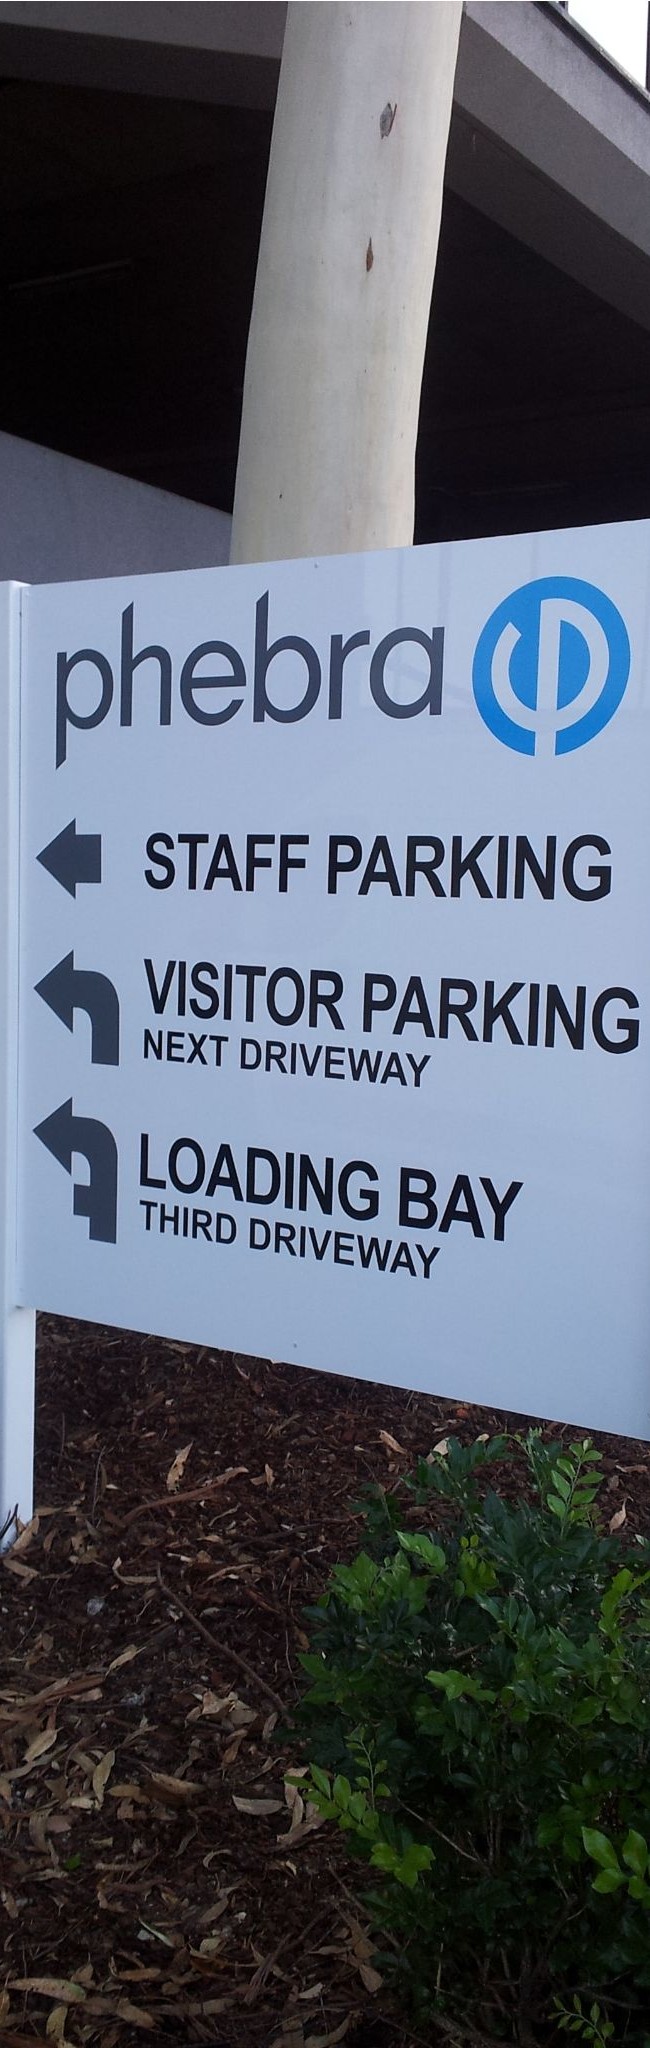 Phebra Parking Sign